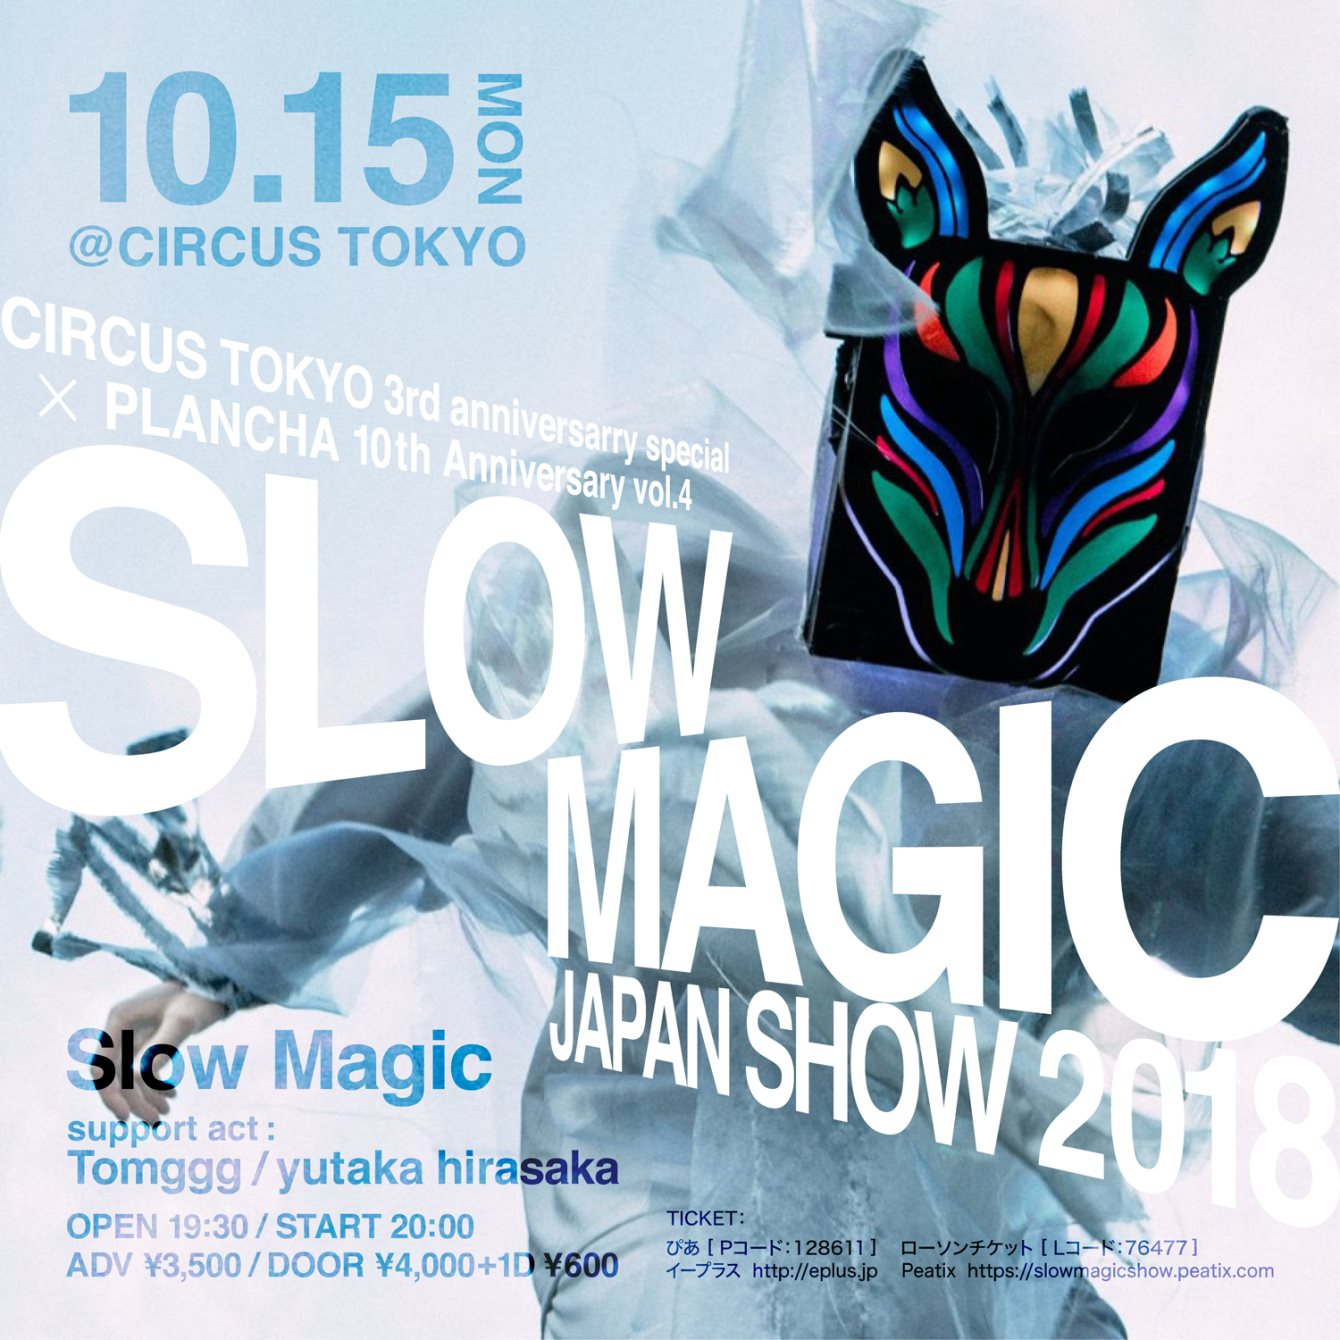 Circus x Plancha 10th Anniversary Vol.4 Slow Magic Japan Show 2018 - Flyer front